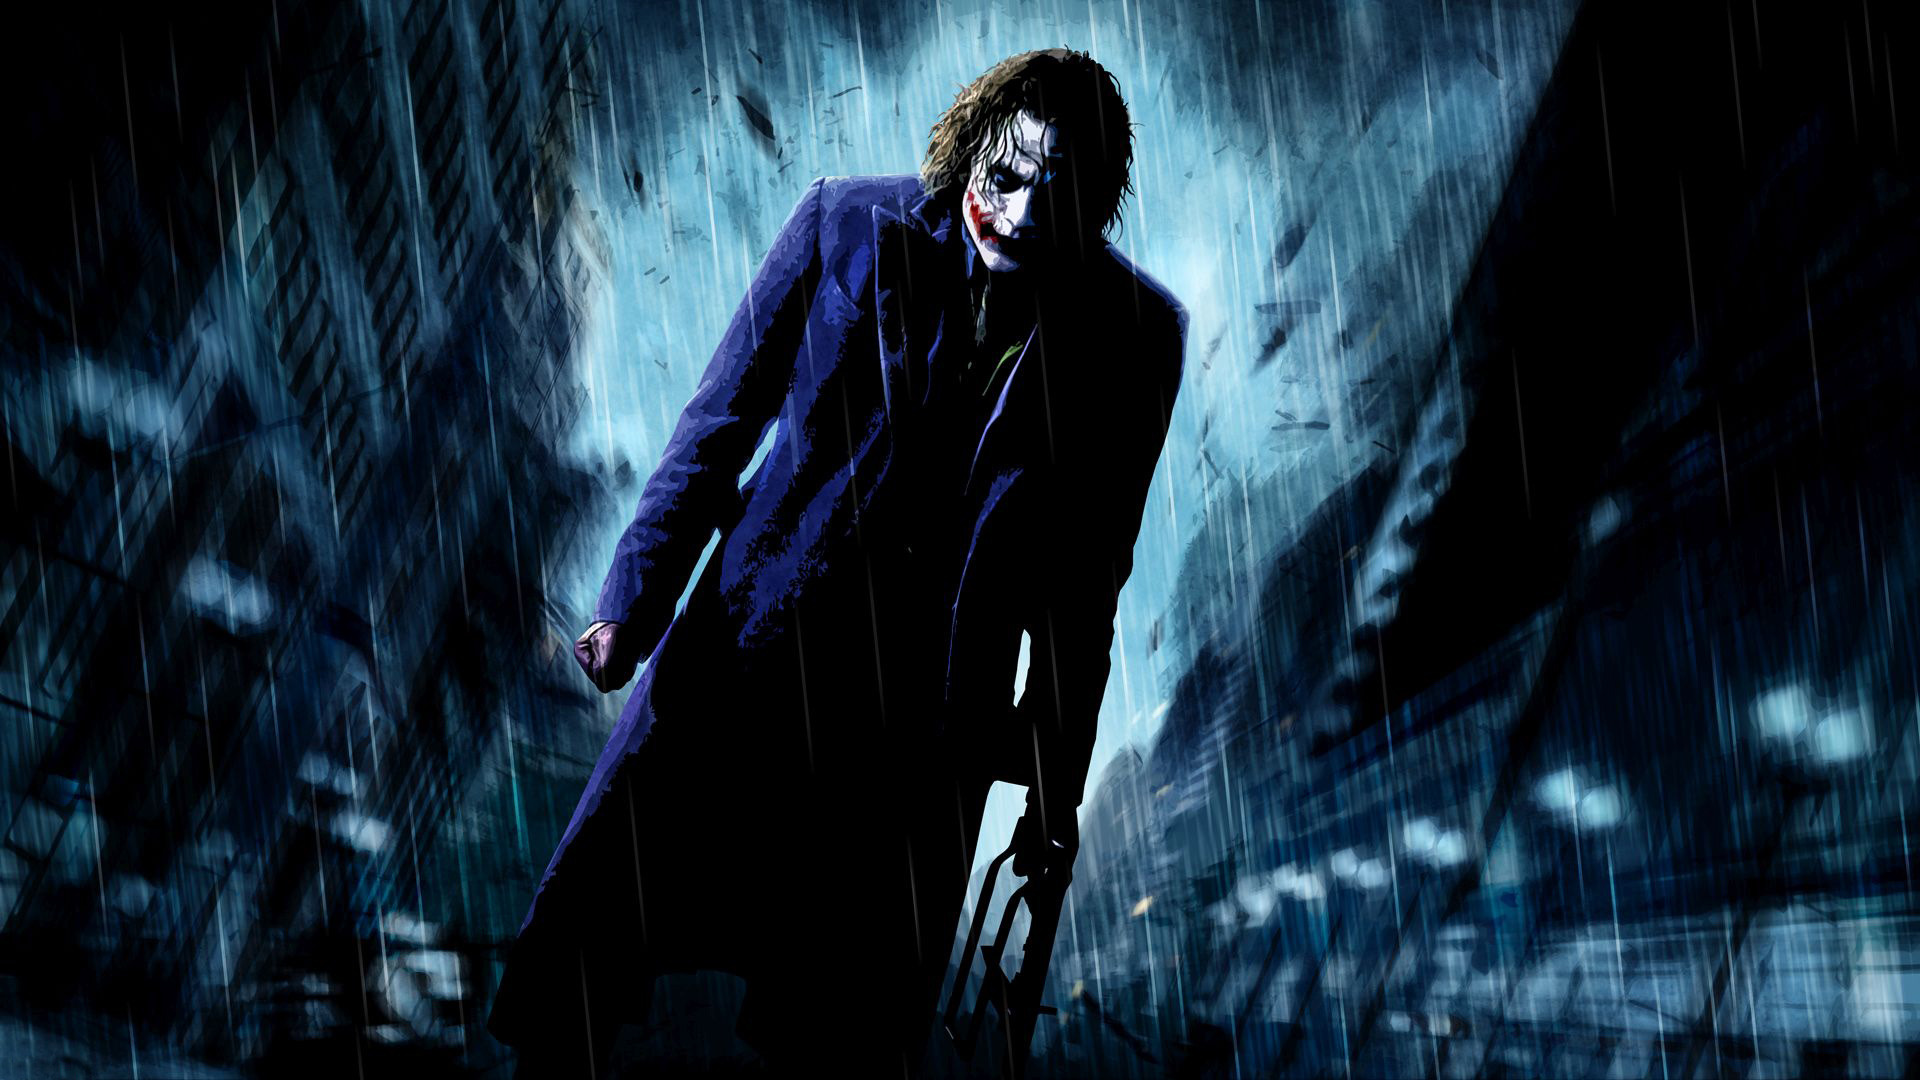 The Joker   The Dark Knight wallpaper 20416 1920x1080